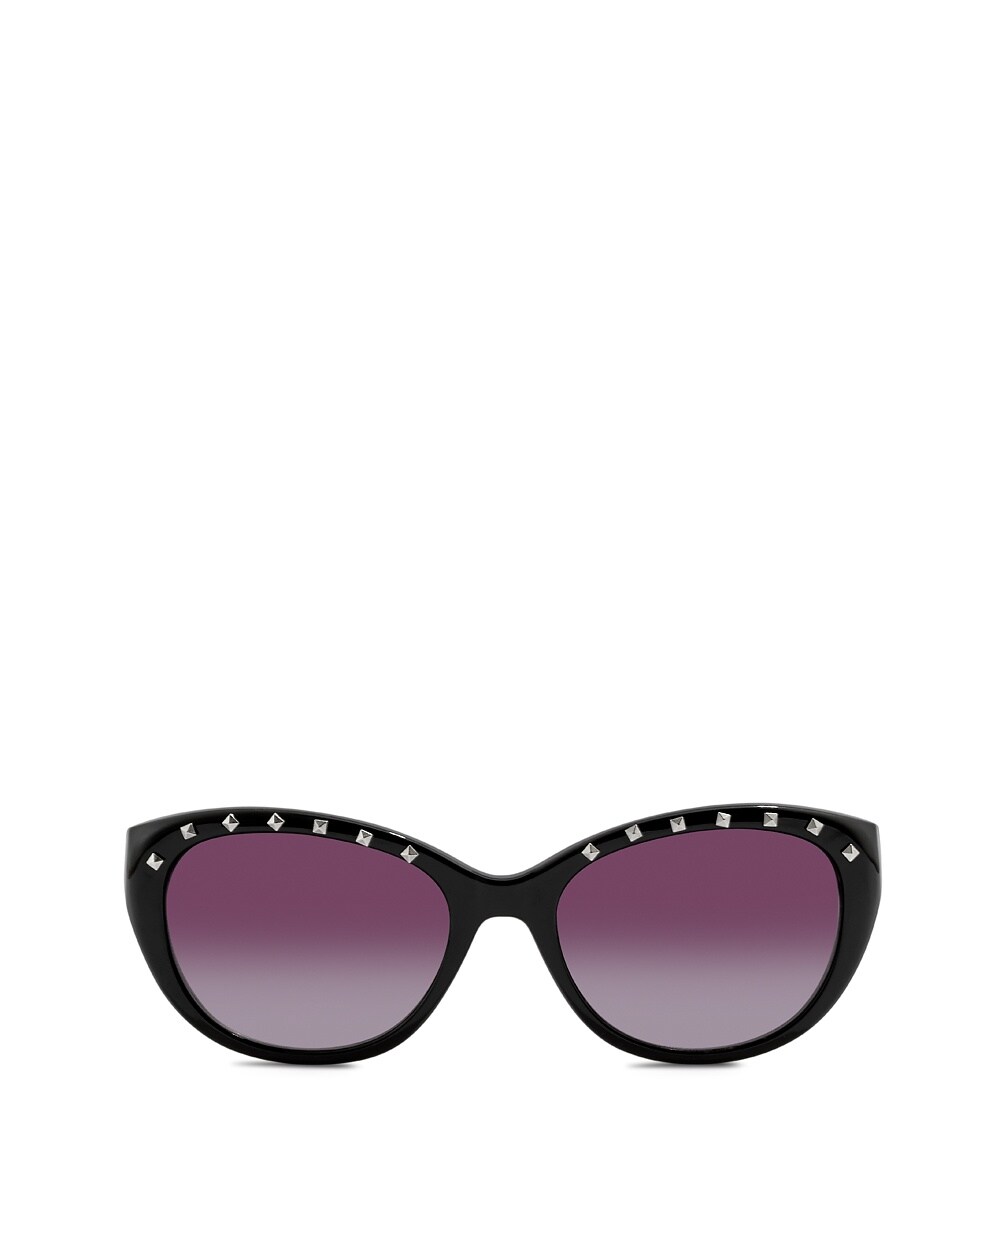 Shaelyn Black Sunglasses